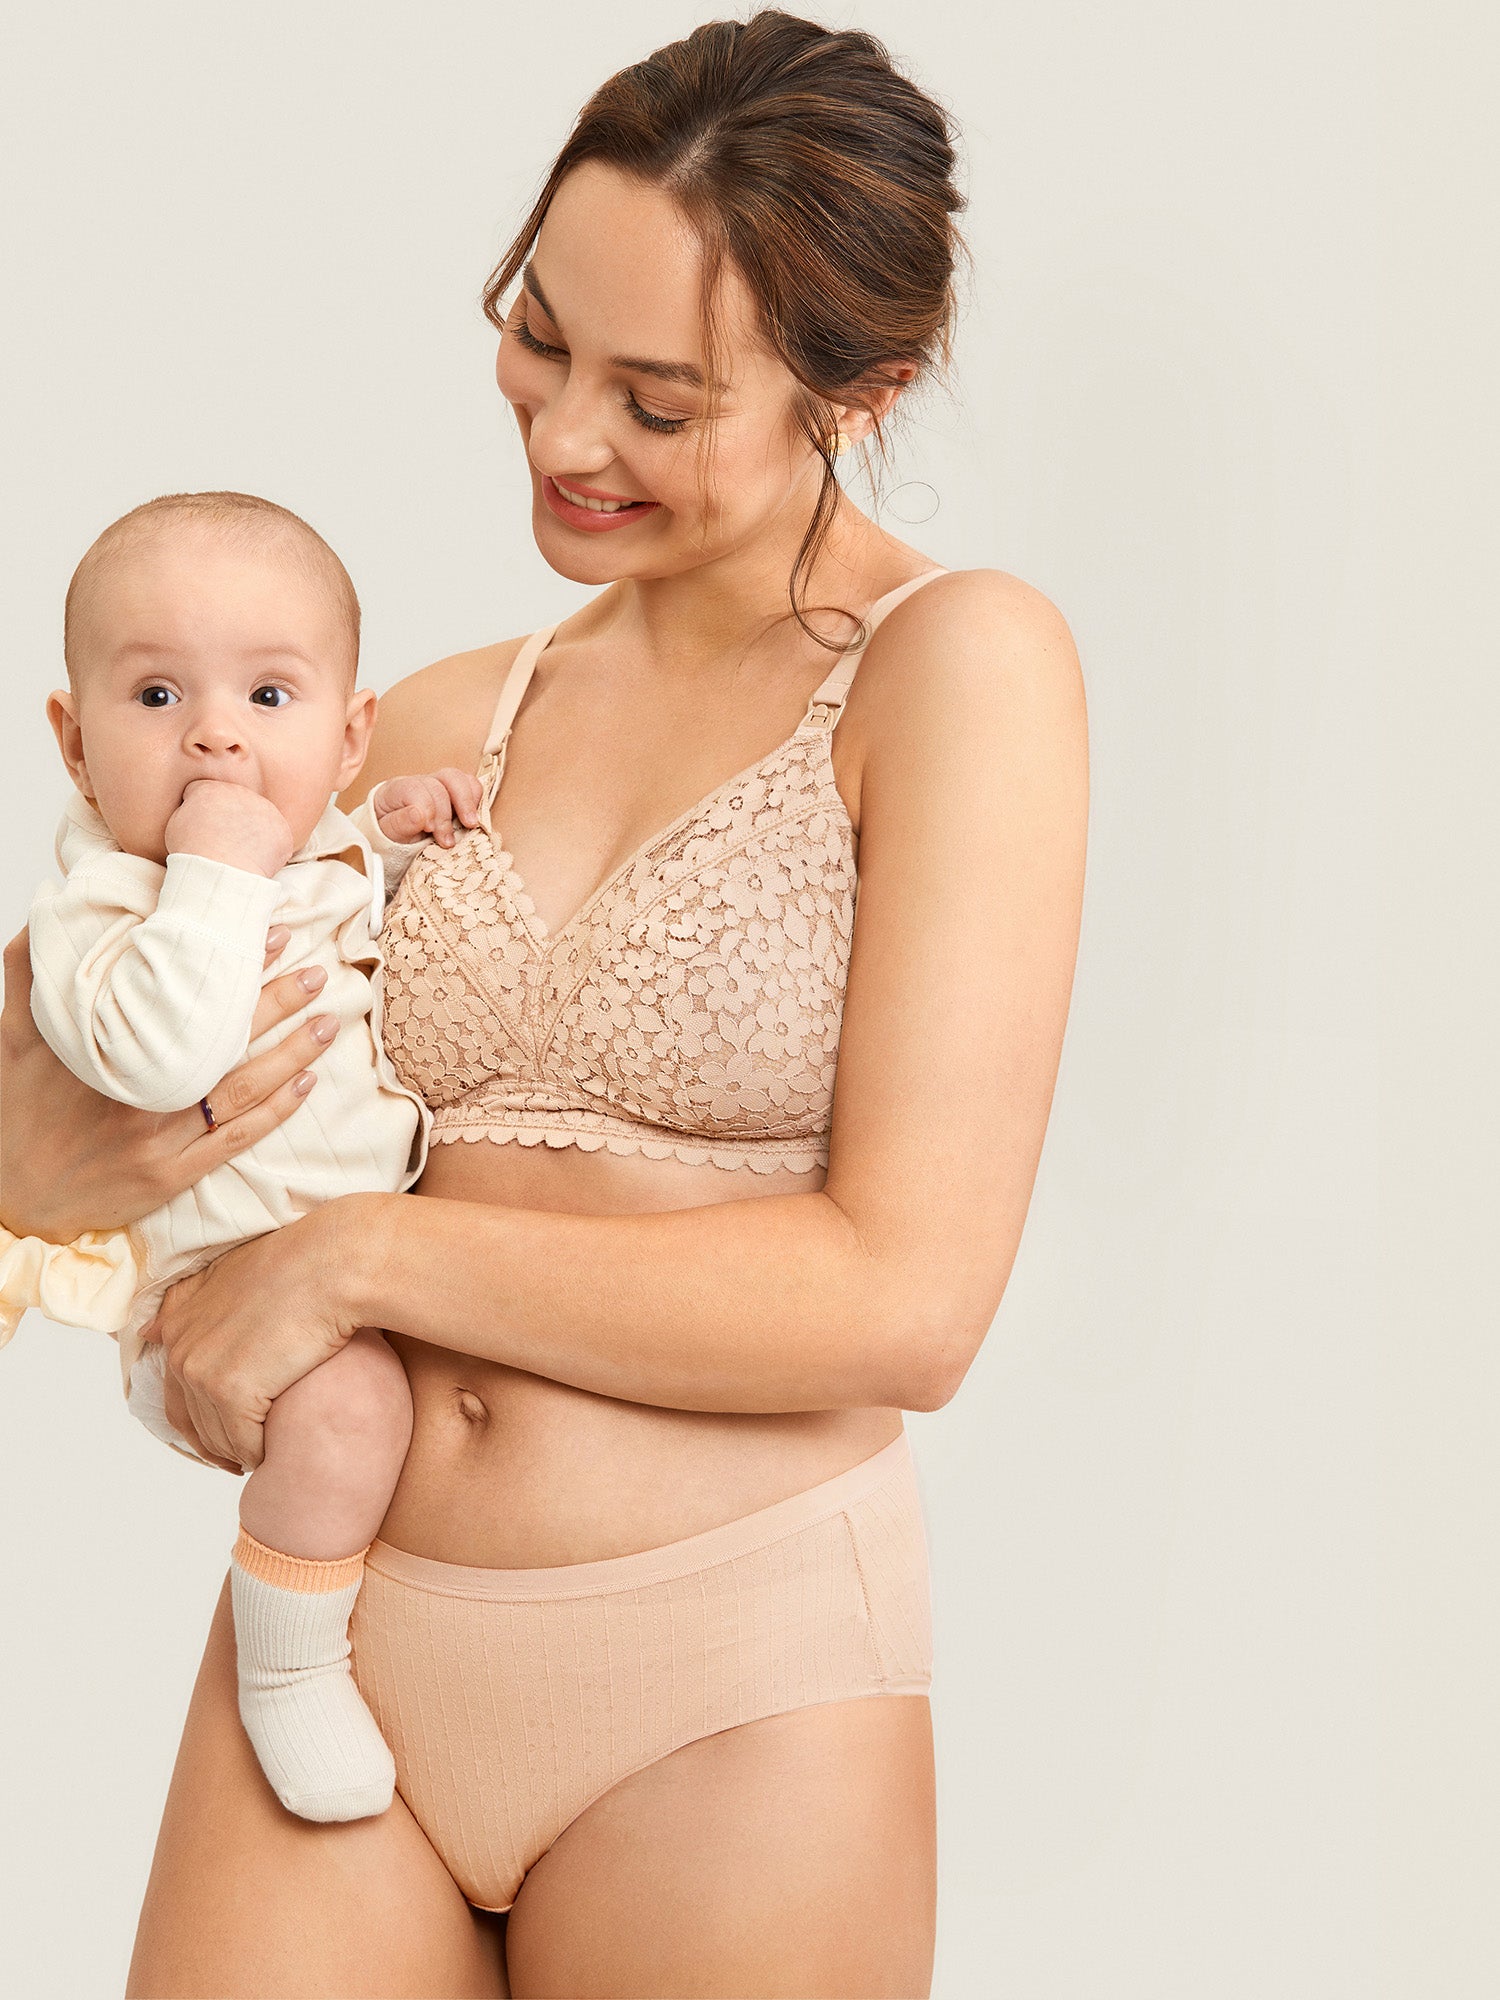 Momanda Lace Hands-free Pumping Bra Nursing Maternity For Pregnant